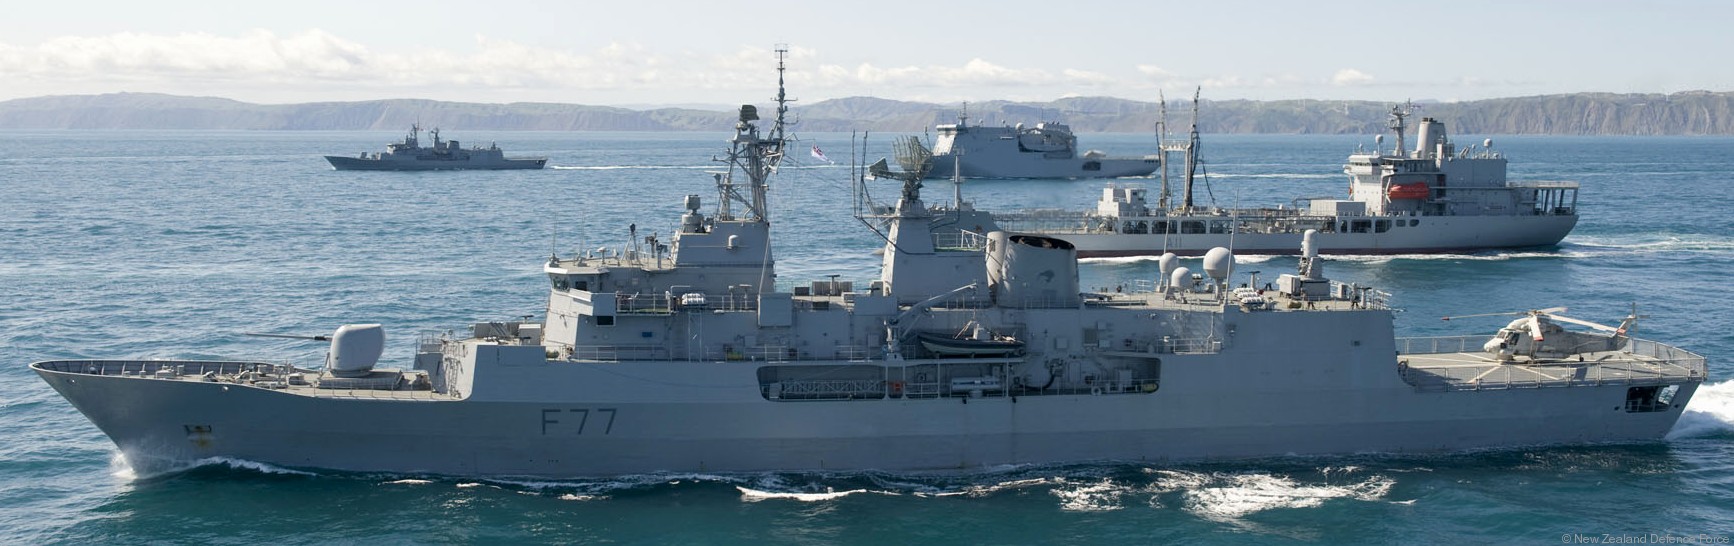 f-77 hmnzs te kaha anzac class frigate royal new zealand navy 19